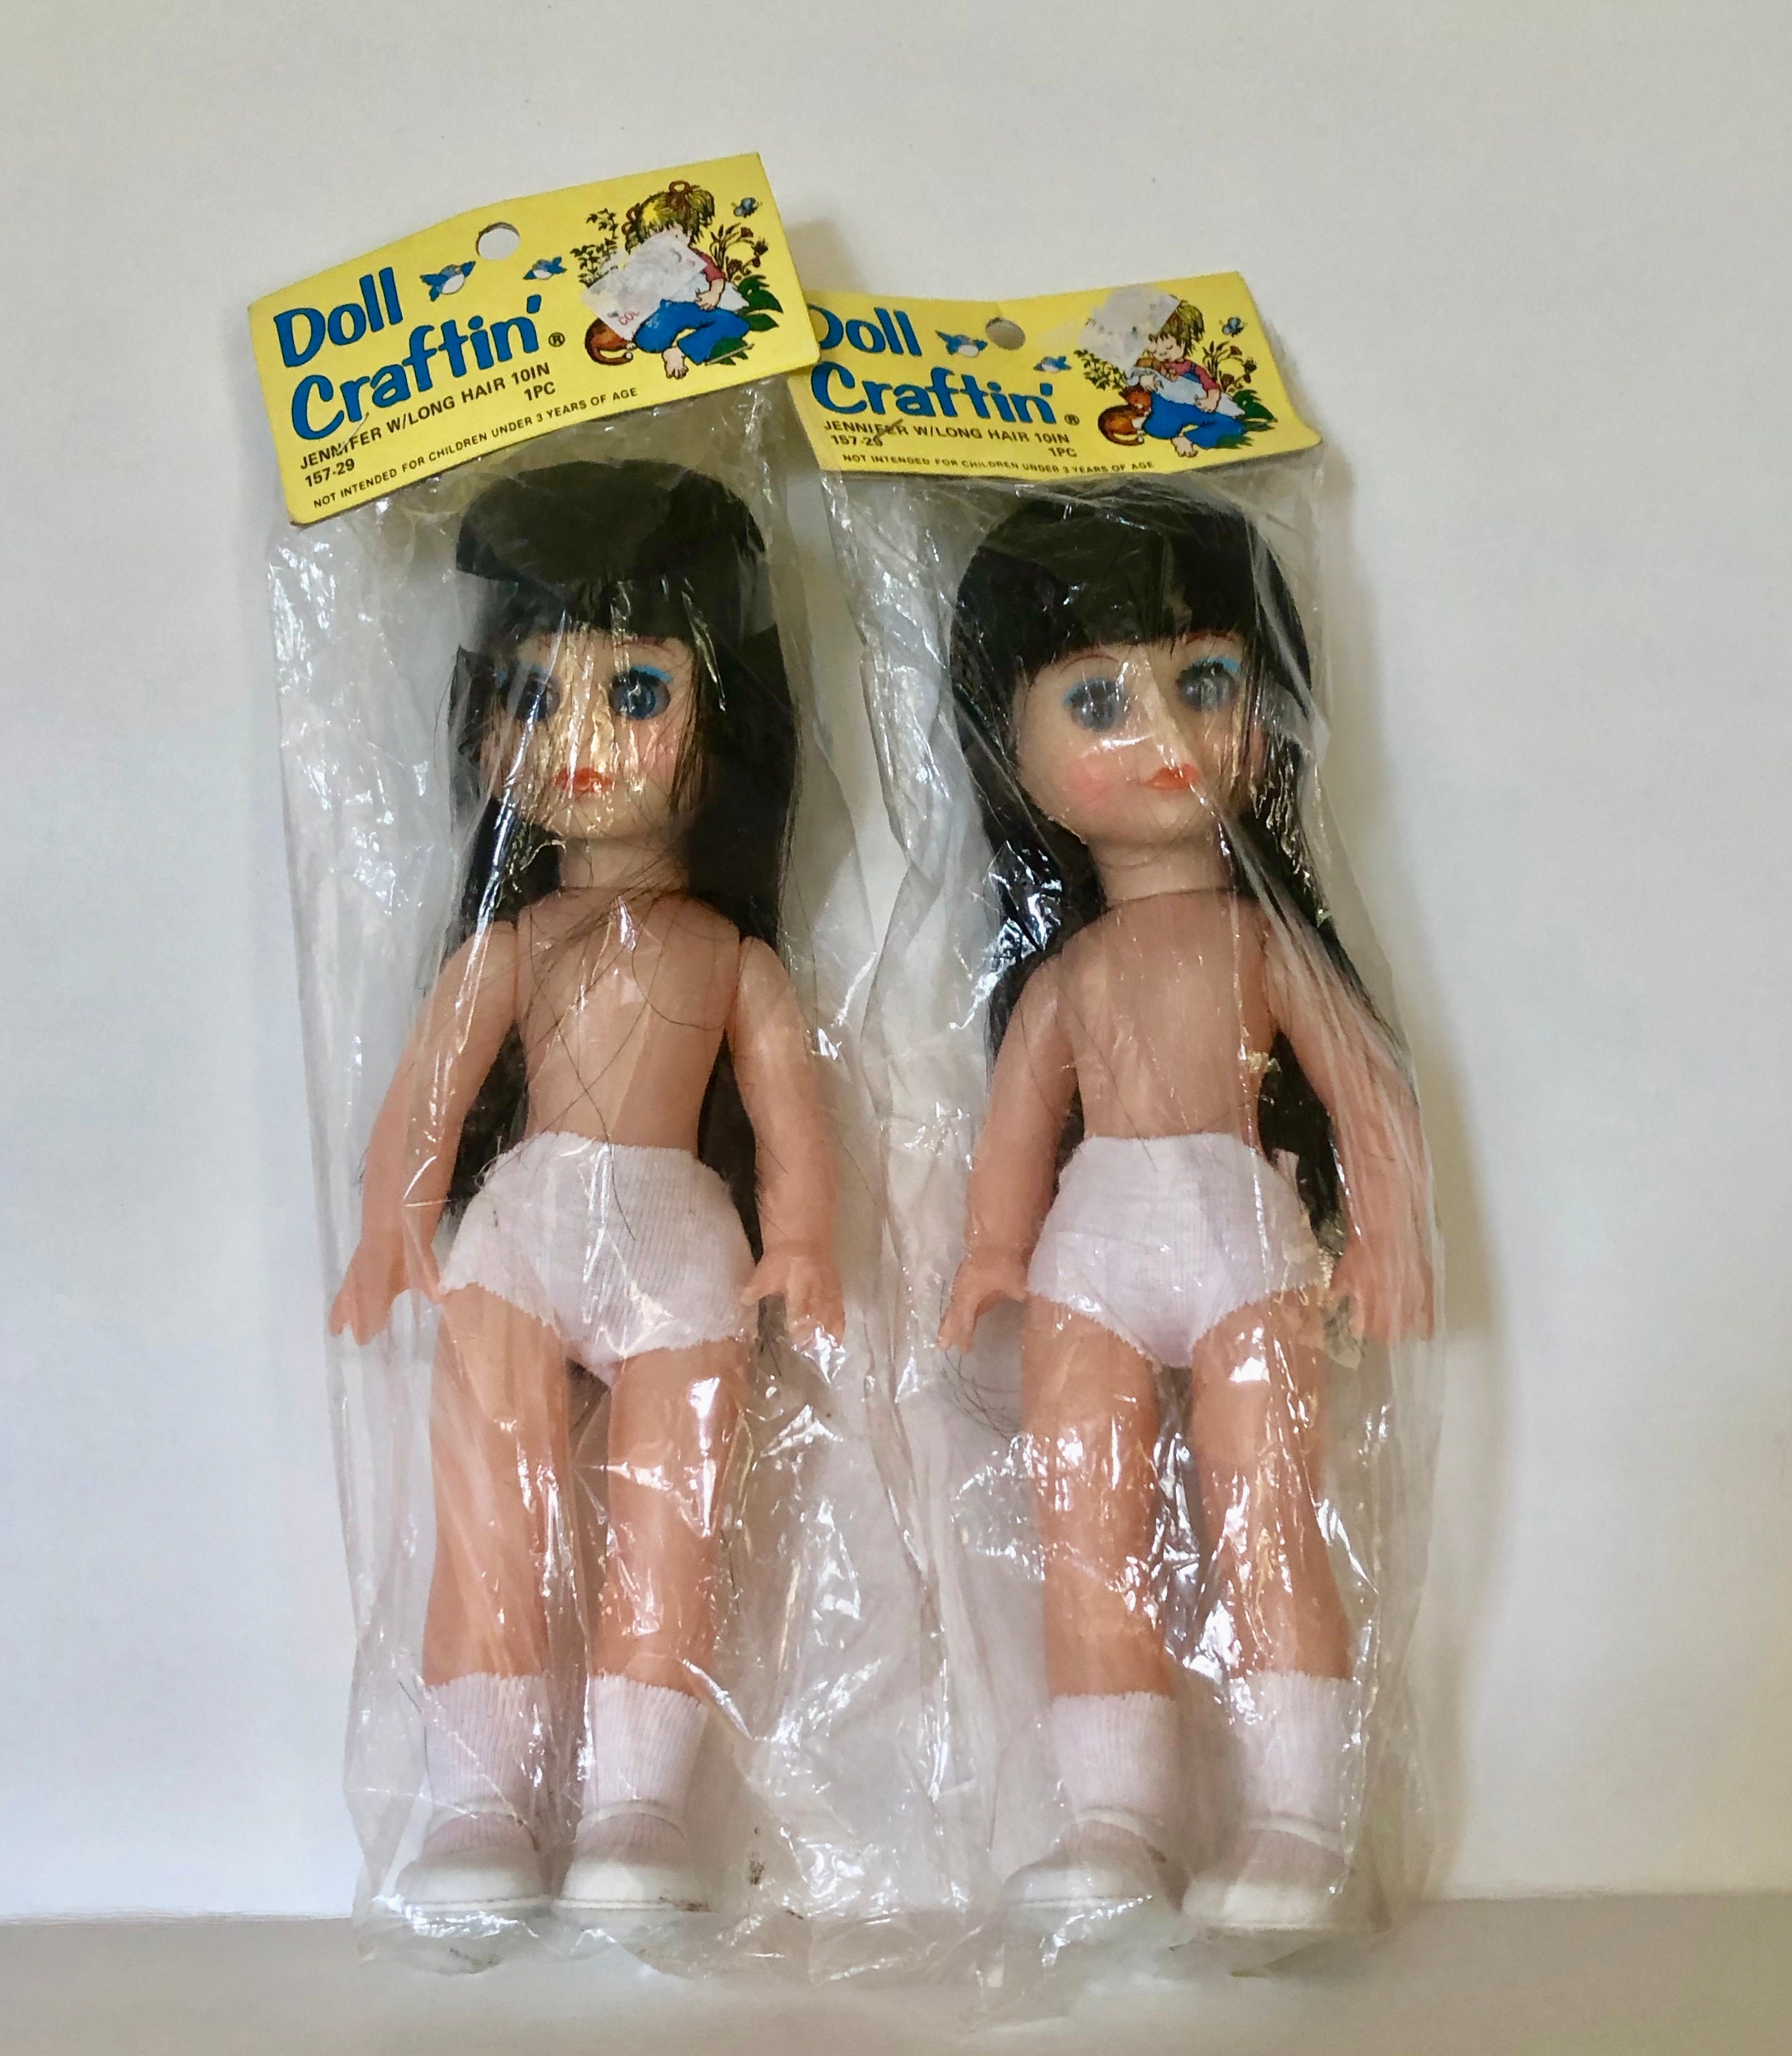 NEW NOS Blue doll eyes 2 pair 9 mm eyes doll making supplies crafting Mangelsens